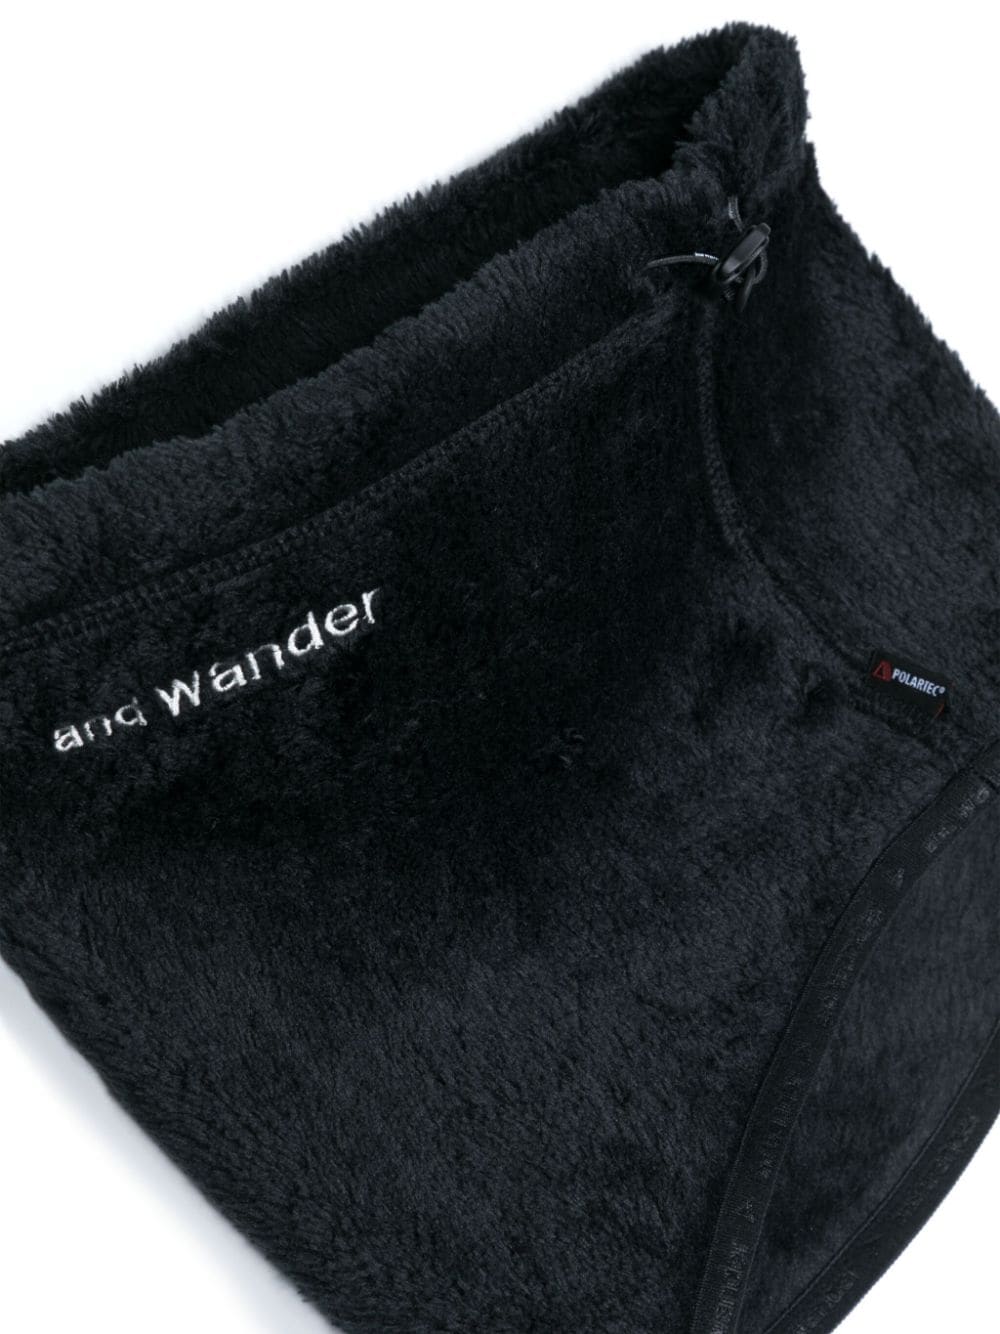 Shop And Wander Logo-embroidered Fleece Neck Warmer